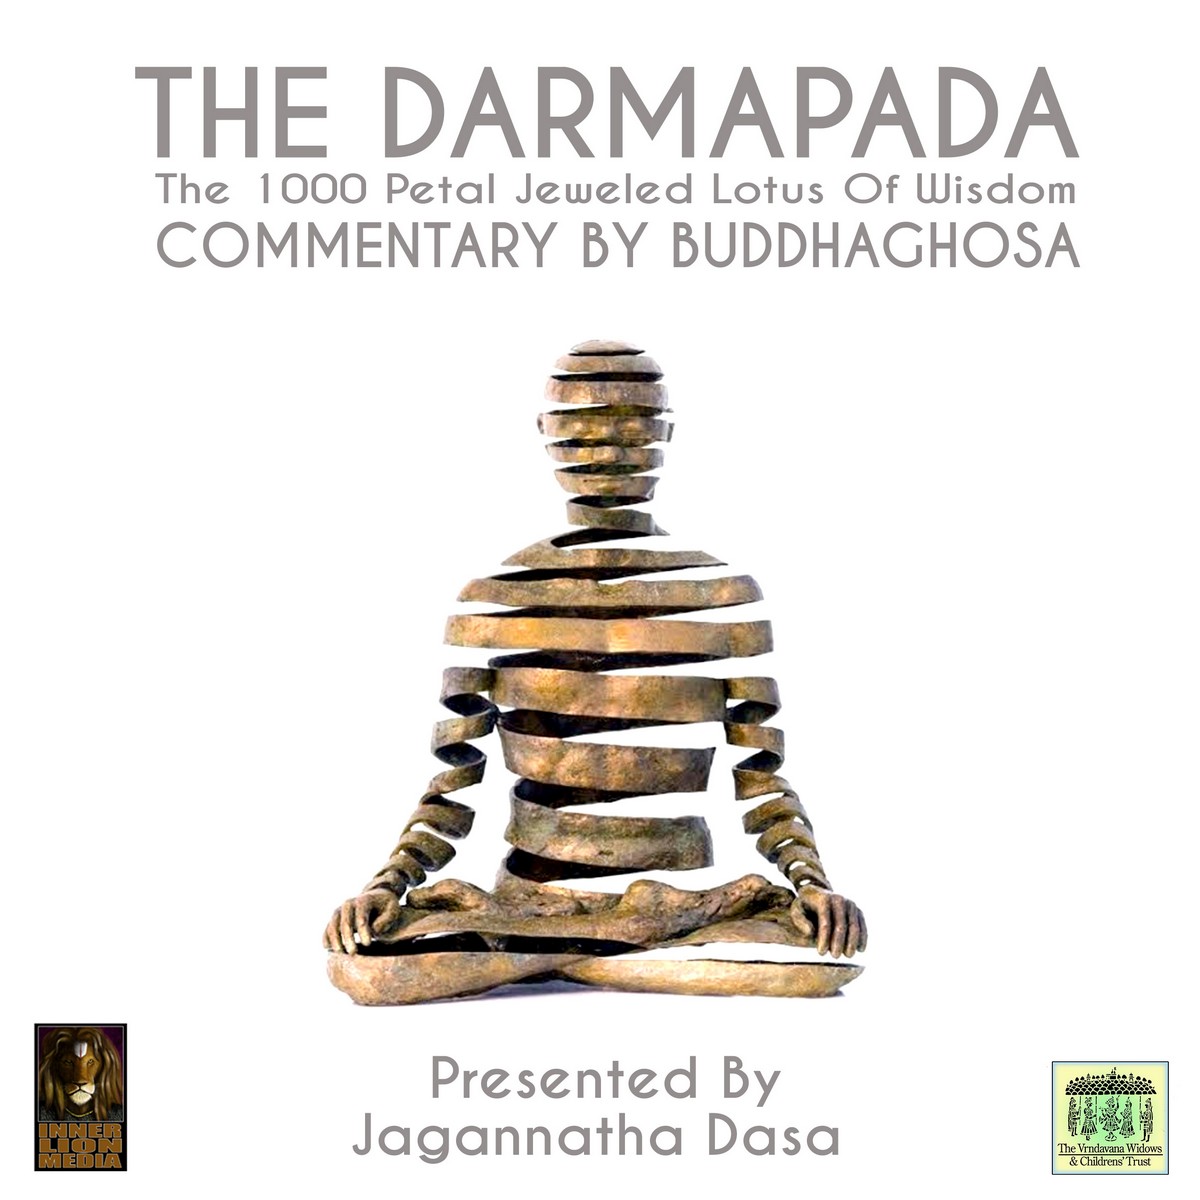 The Darmapada The 1000 Petal Jeweled Lotus Of Wisdom Commentary by Buddhaghosa